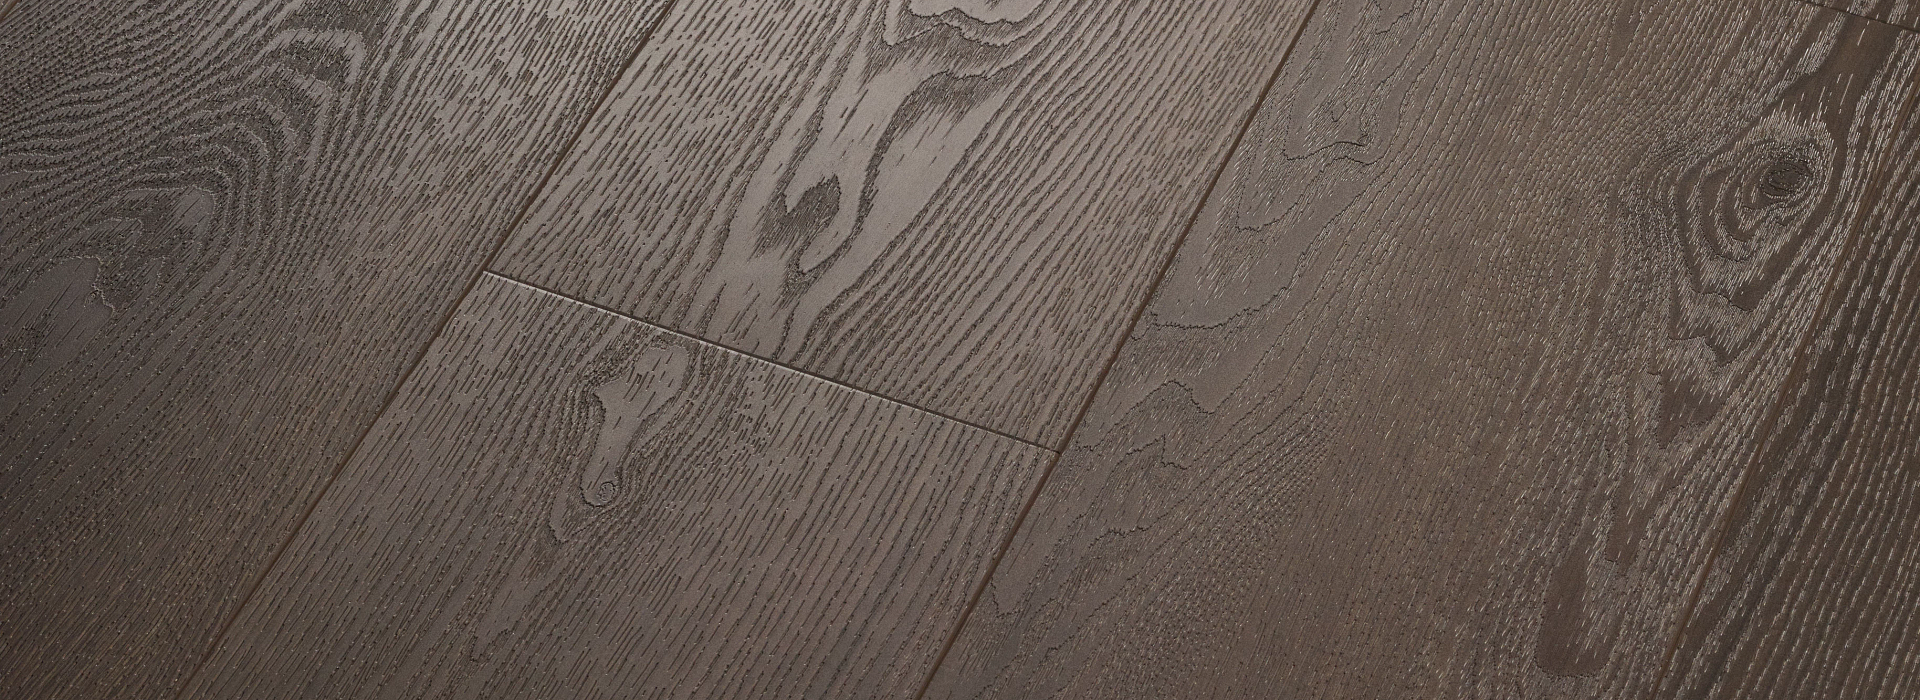 Close-up of a dark mocha hardwood flooring